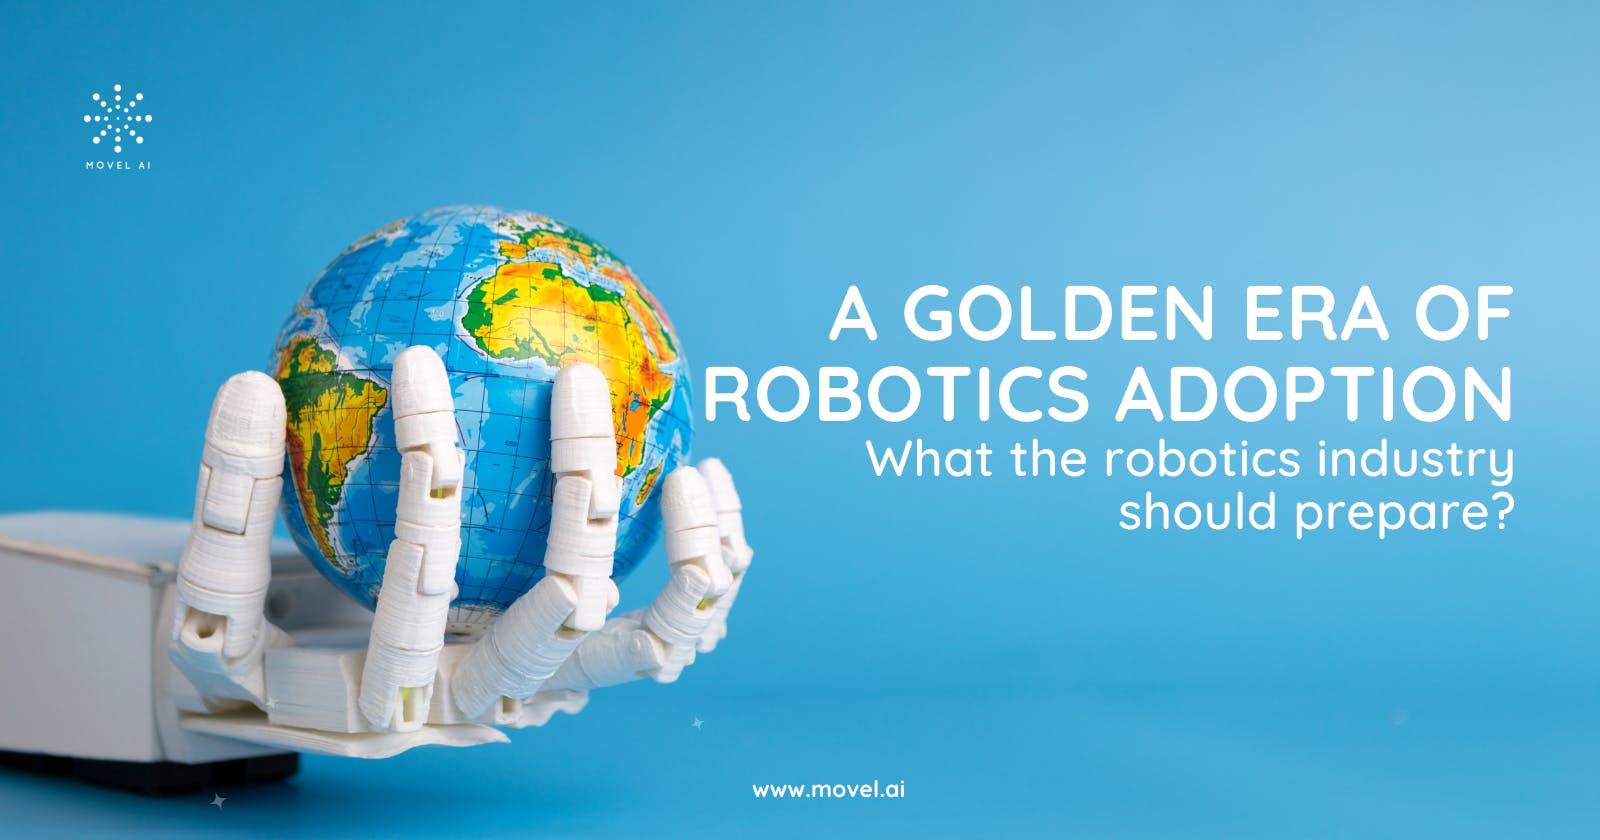 A golden era of robotics adoption